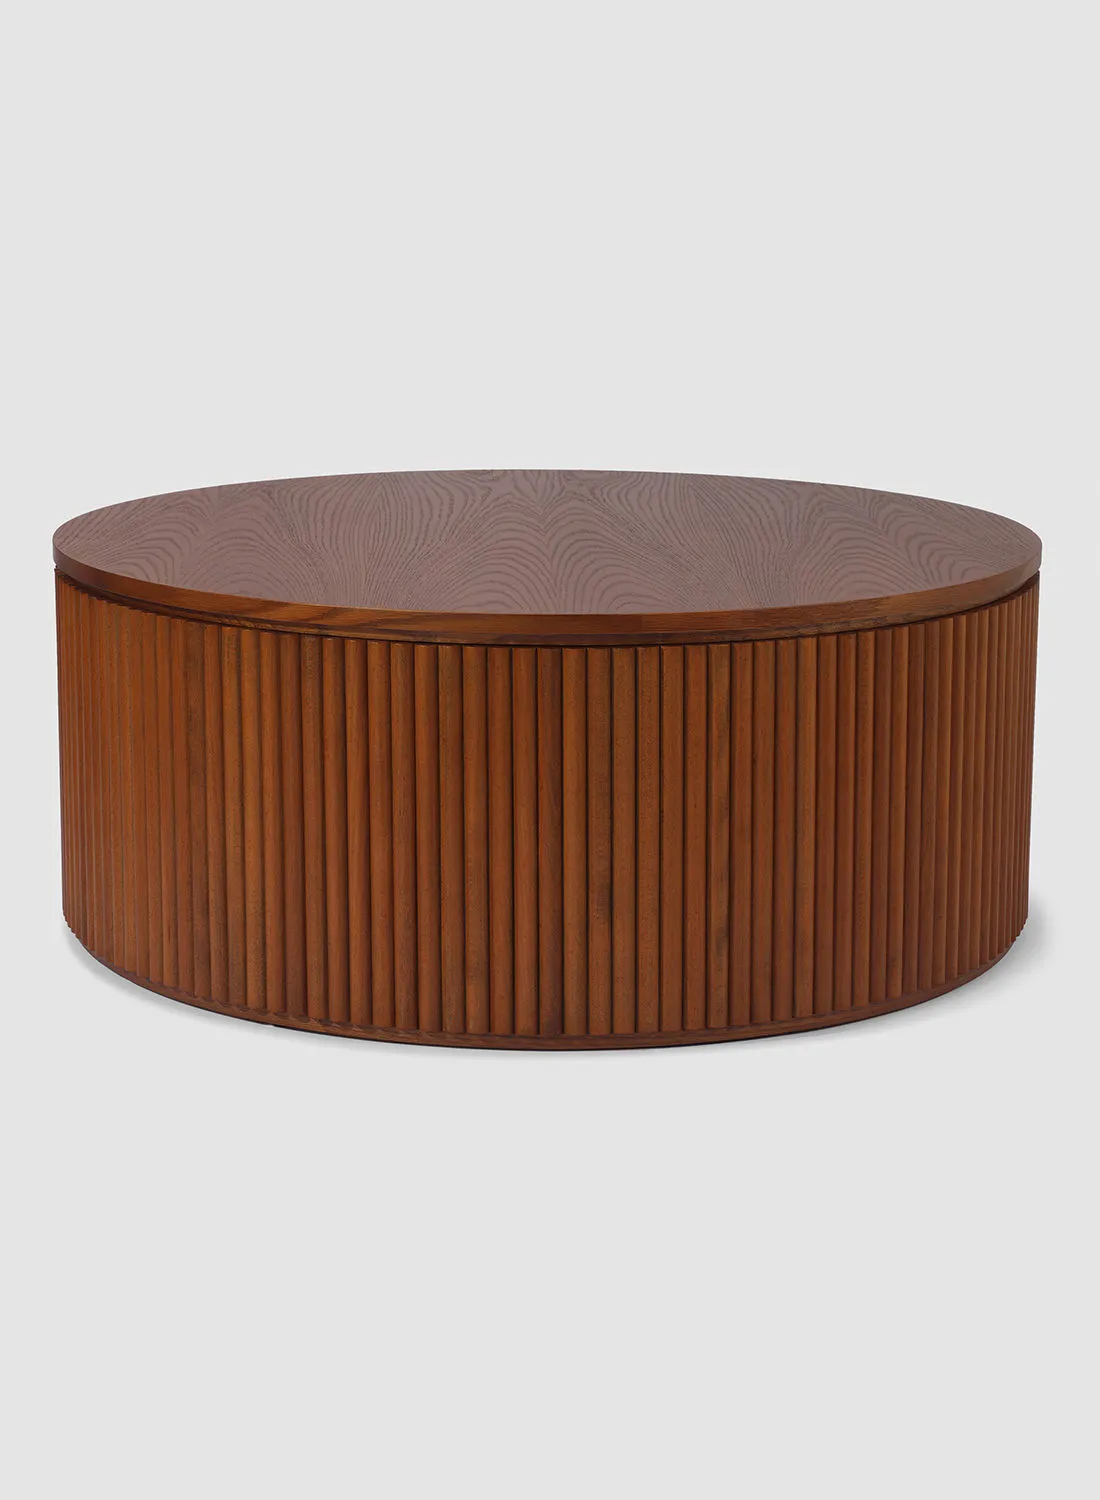 ebb & flow Coffee Table Luxurious -Used As Coffee Corner In Dark Brown Wood - Size 58 X 58 X 42H